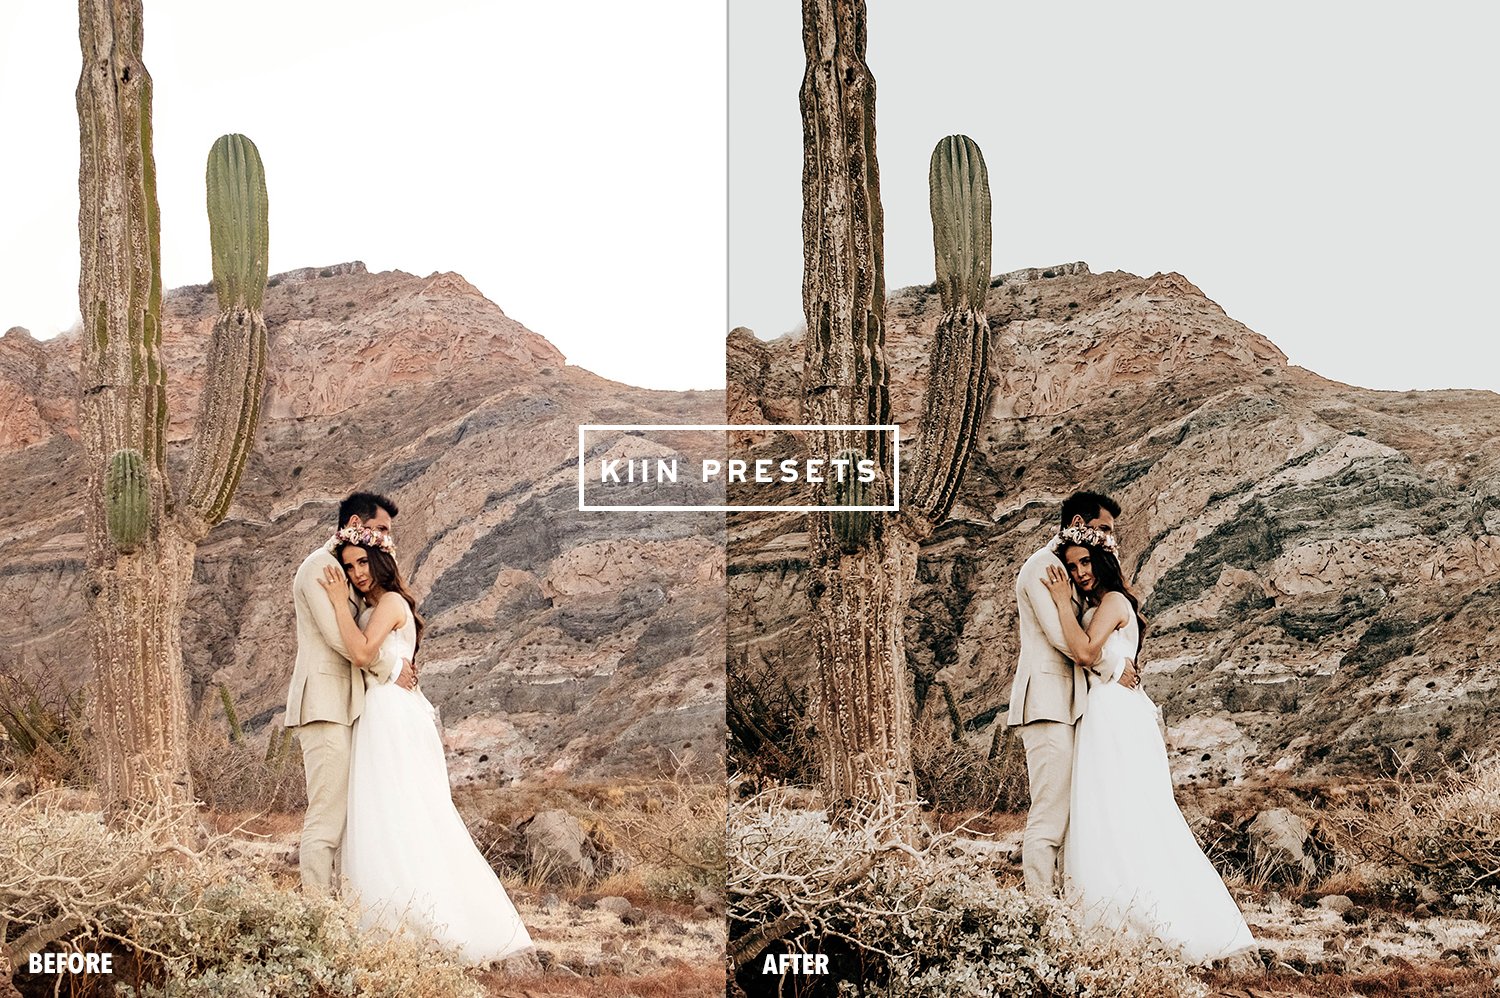 02kiin presetslightroom presetsmobile presets wedding presets boho wedding presets wedding photography preset wedding filter boho presets. 589